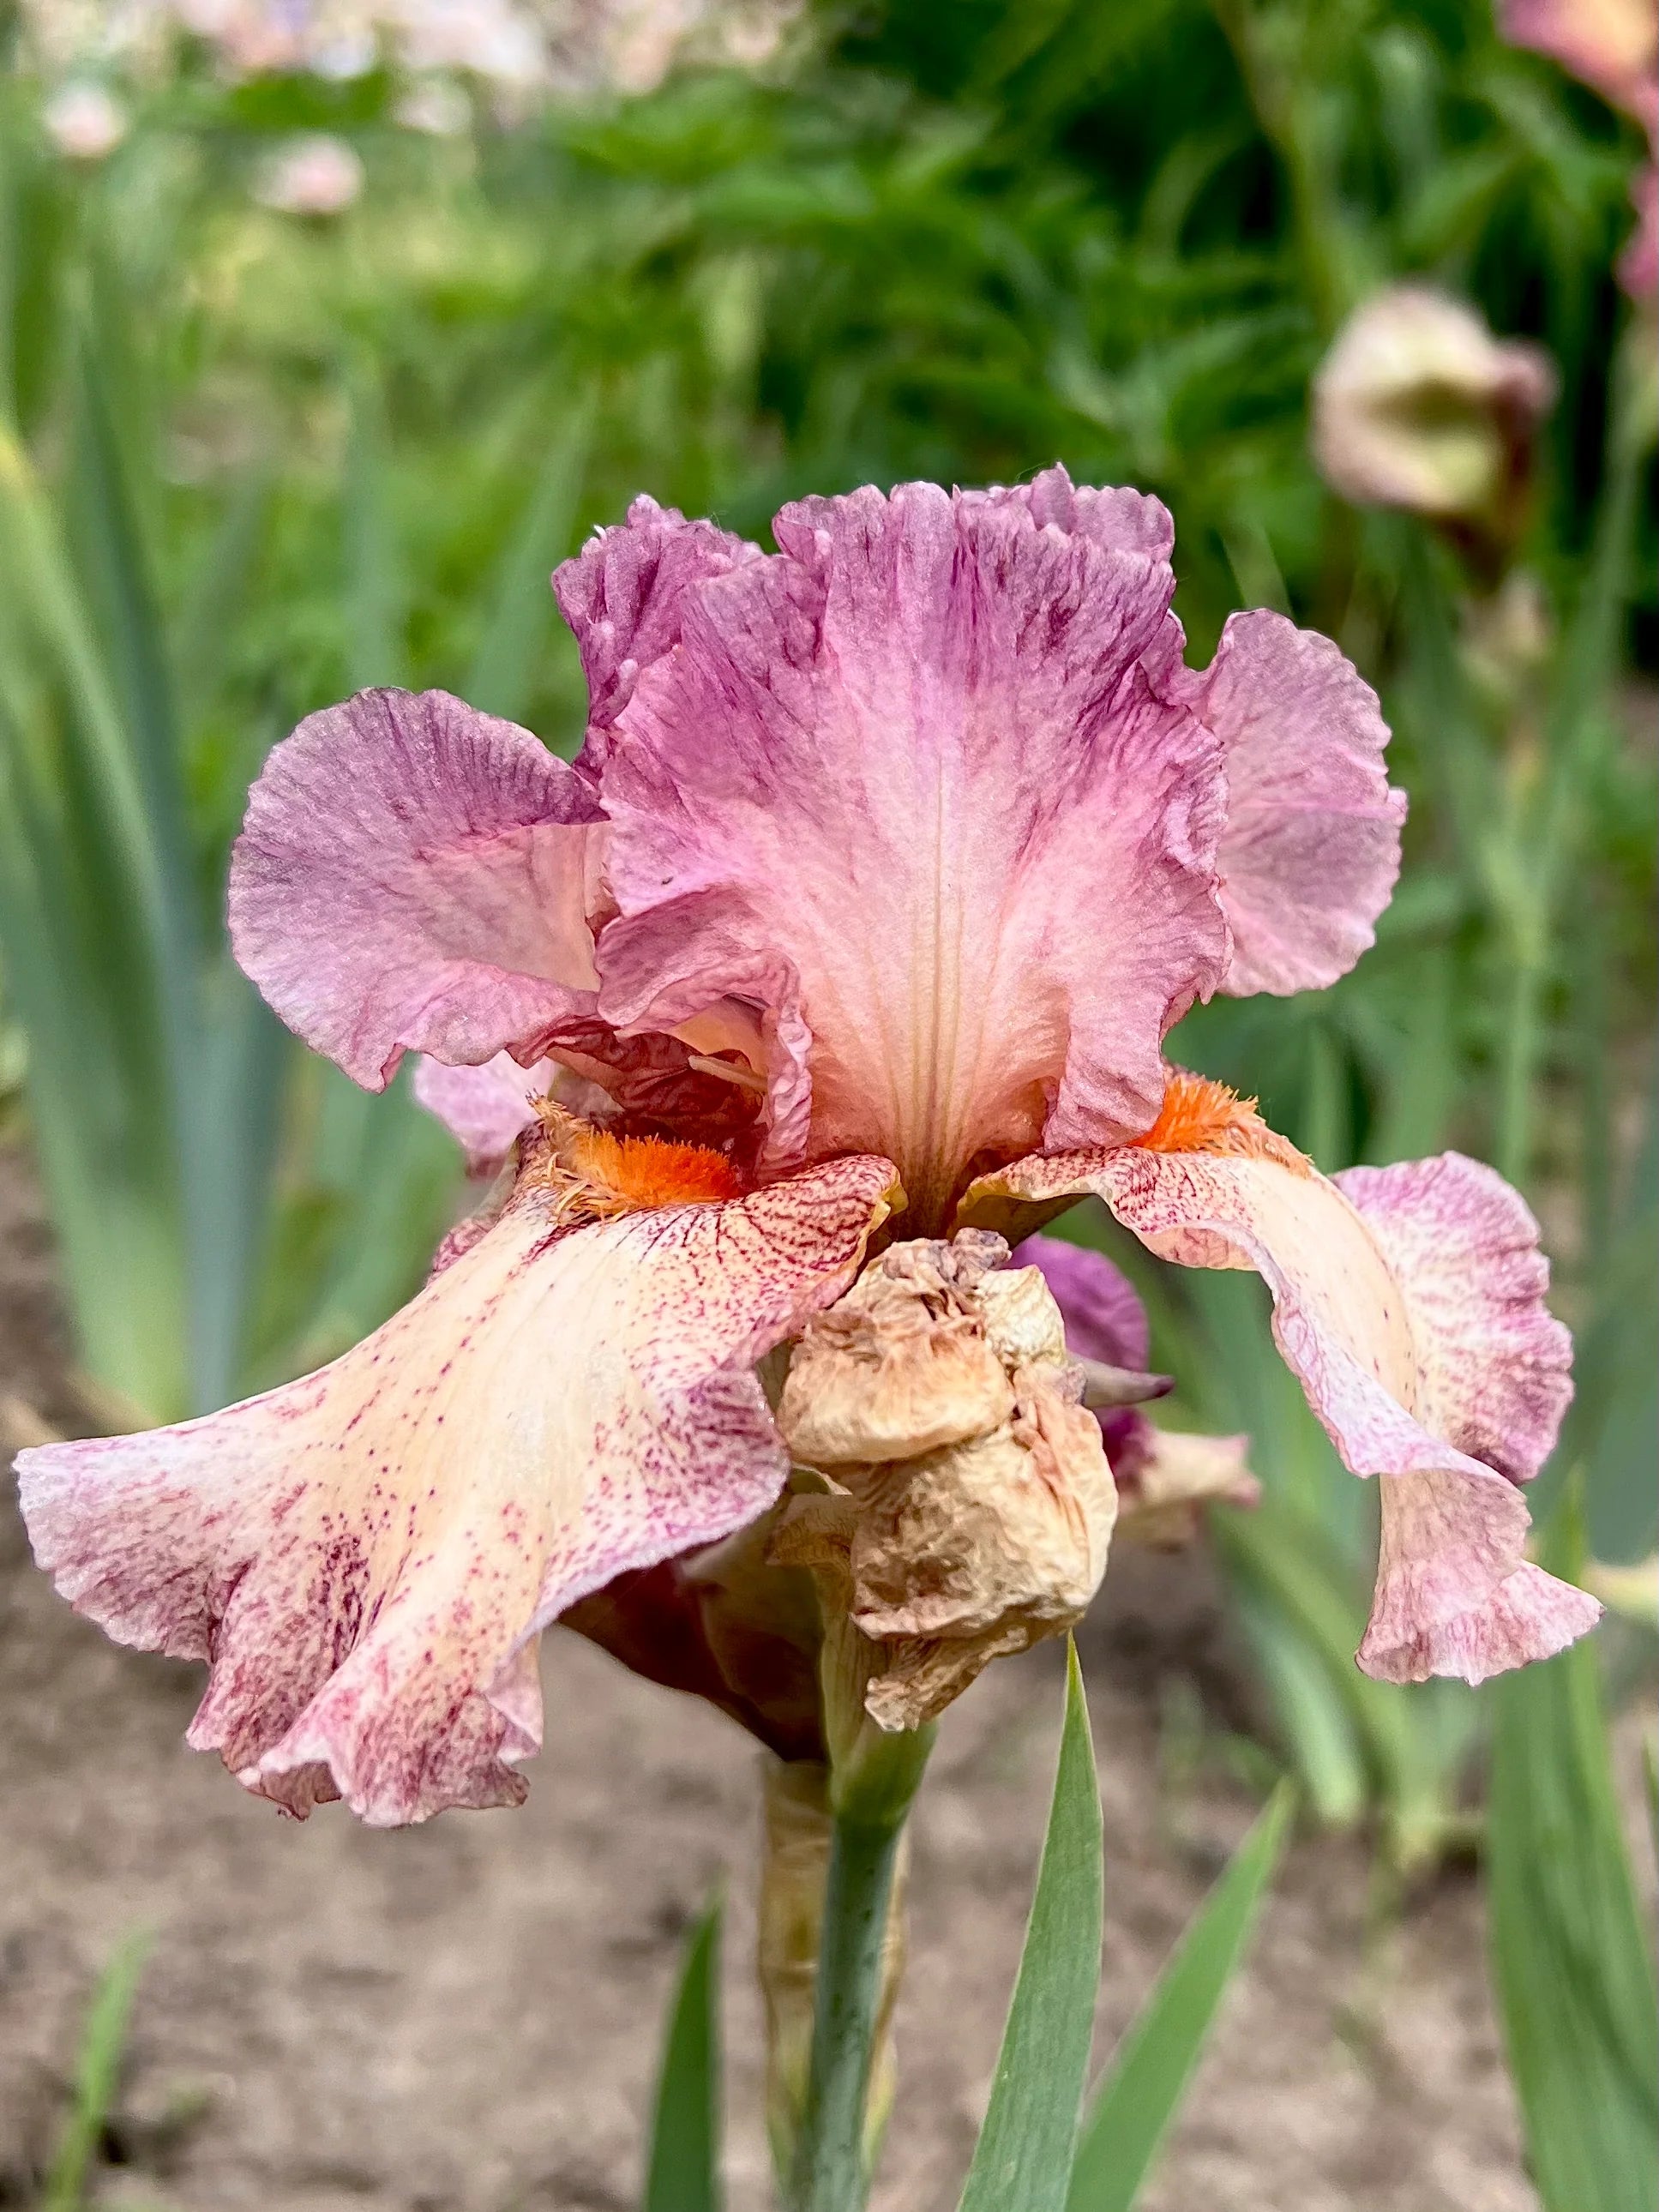 Beautiful Iris Collection